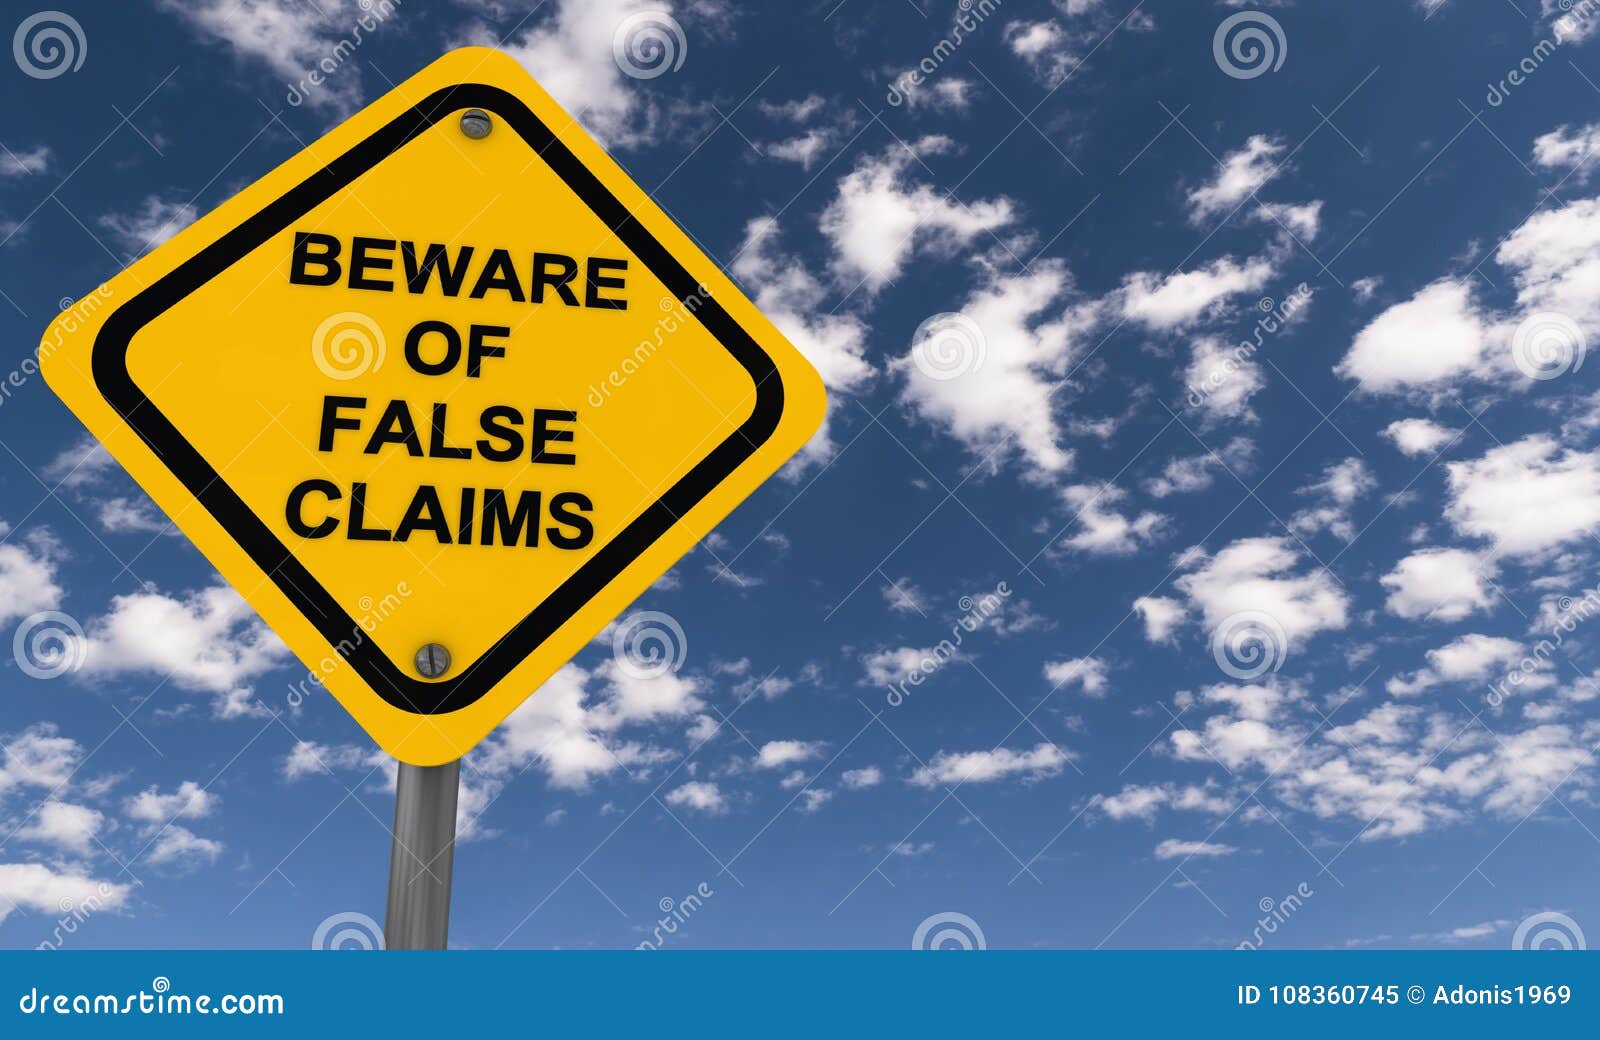 beware of false claims